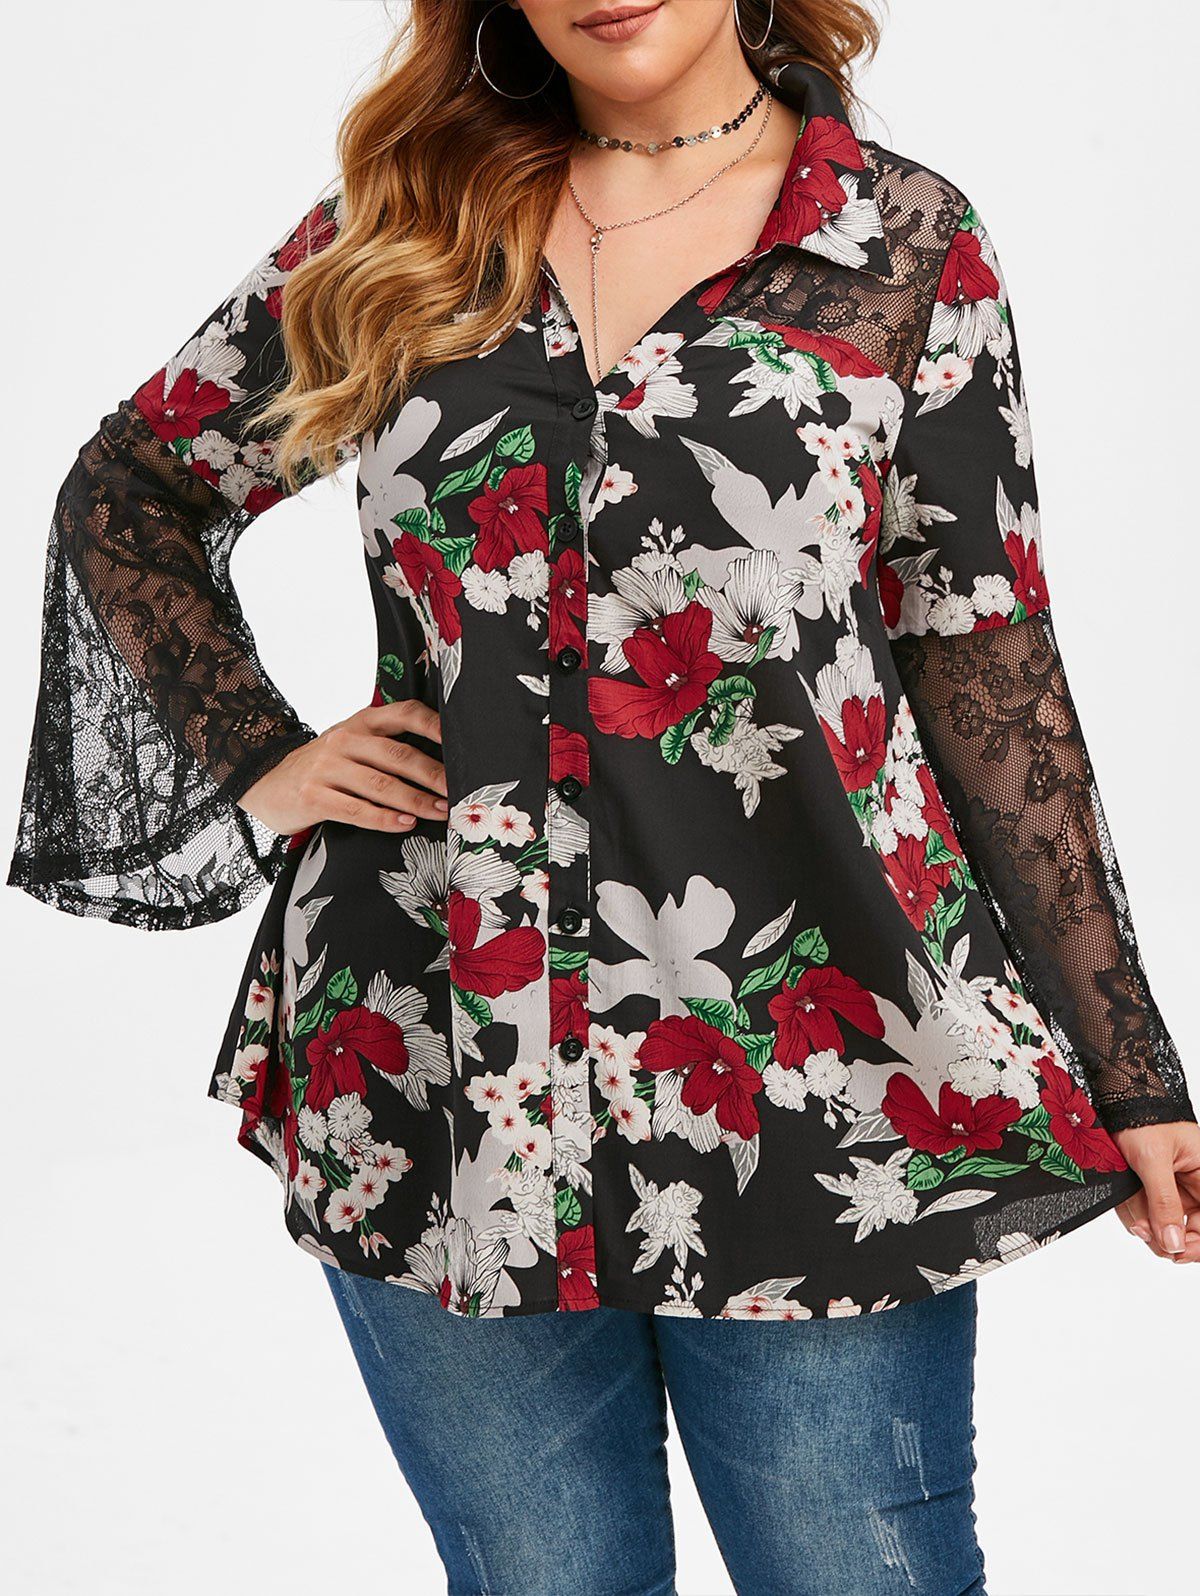 Plus Size Floral Print Bell Sleeve Shirt - BLACK 4X